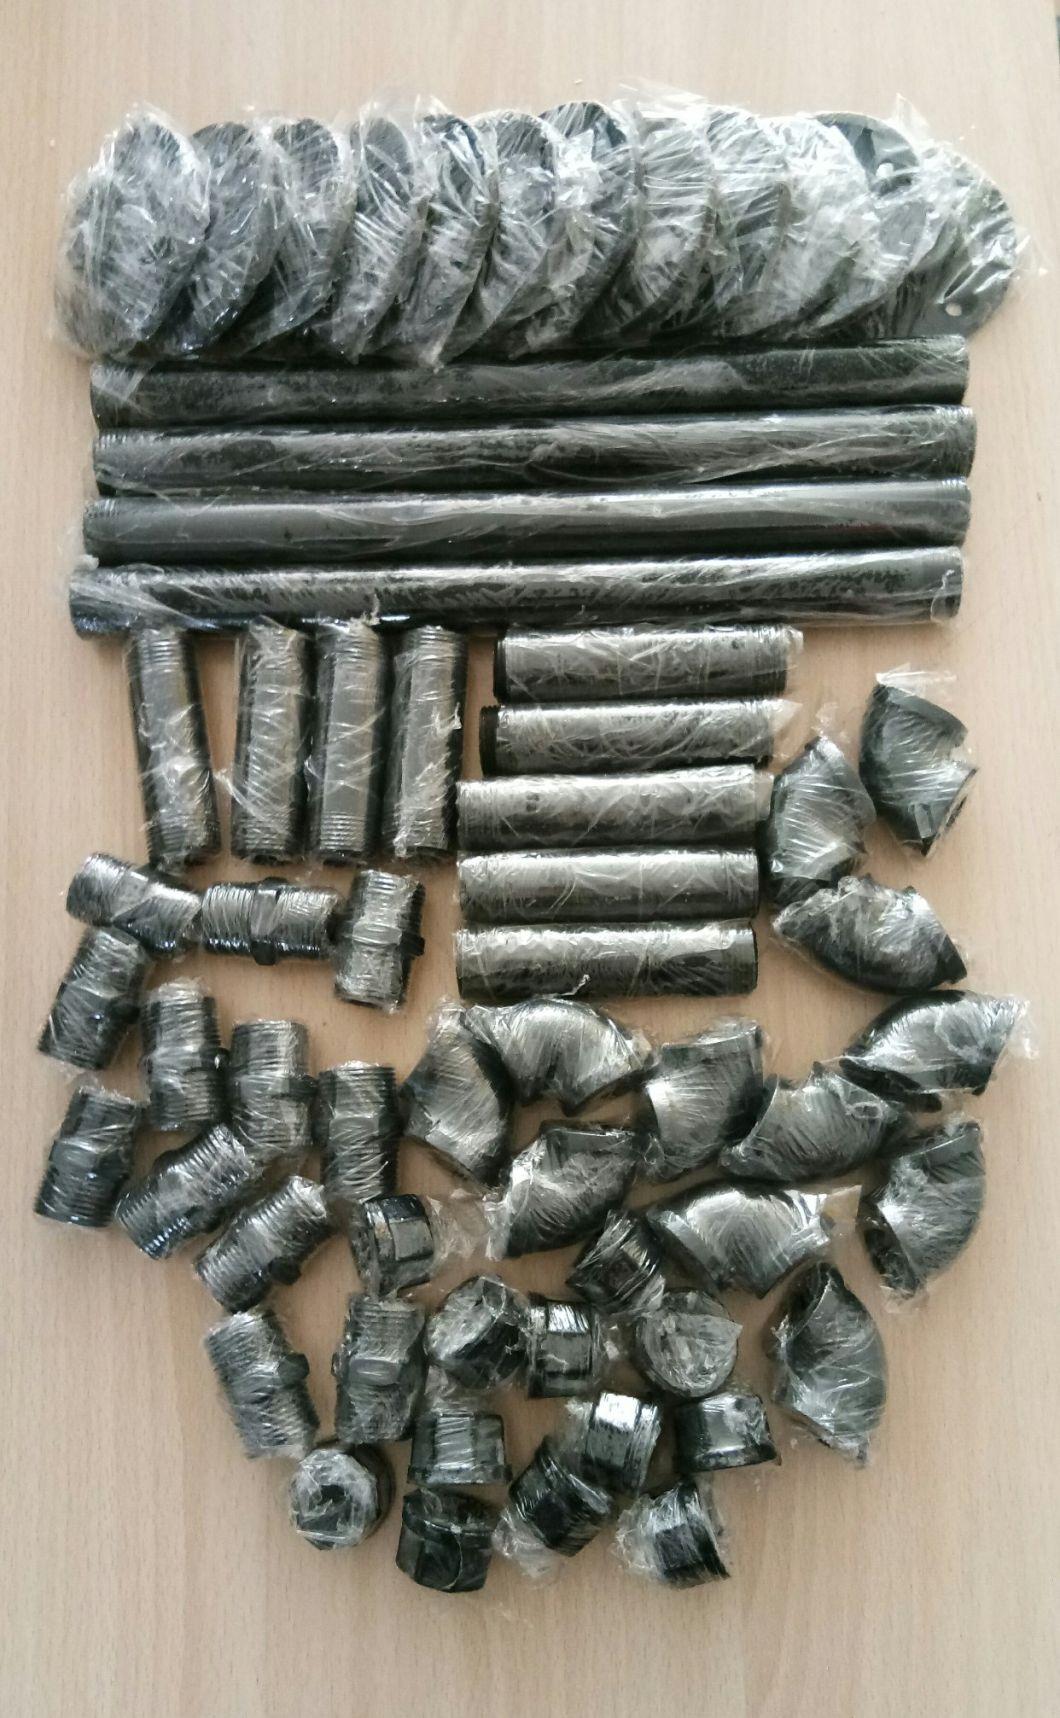 3/4" Bsp Thread Industrial Black Iron Pipe Shelf Brackets for Home Furniture